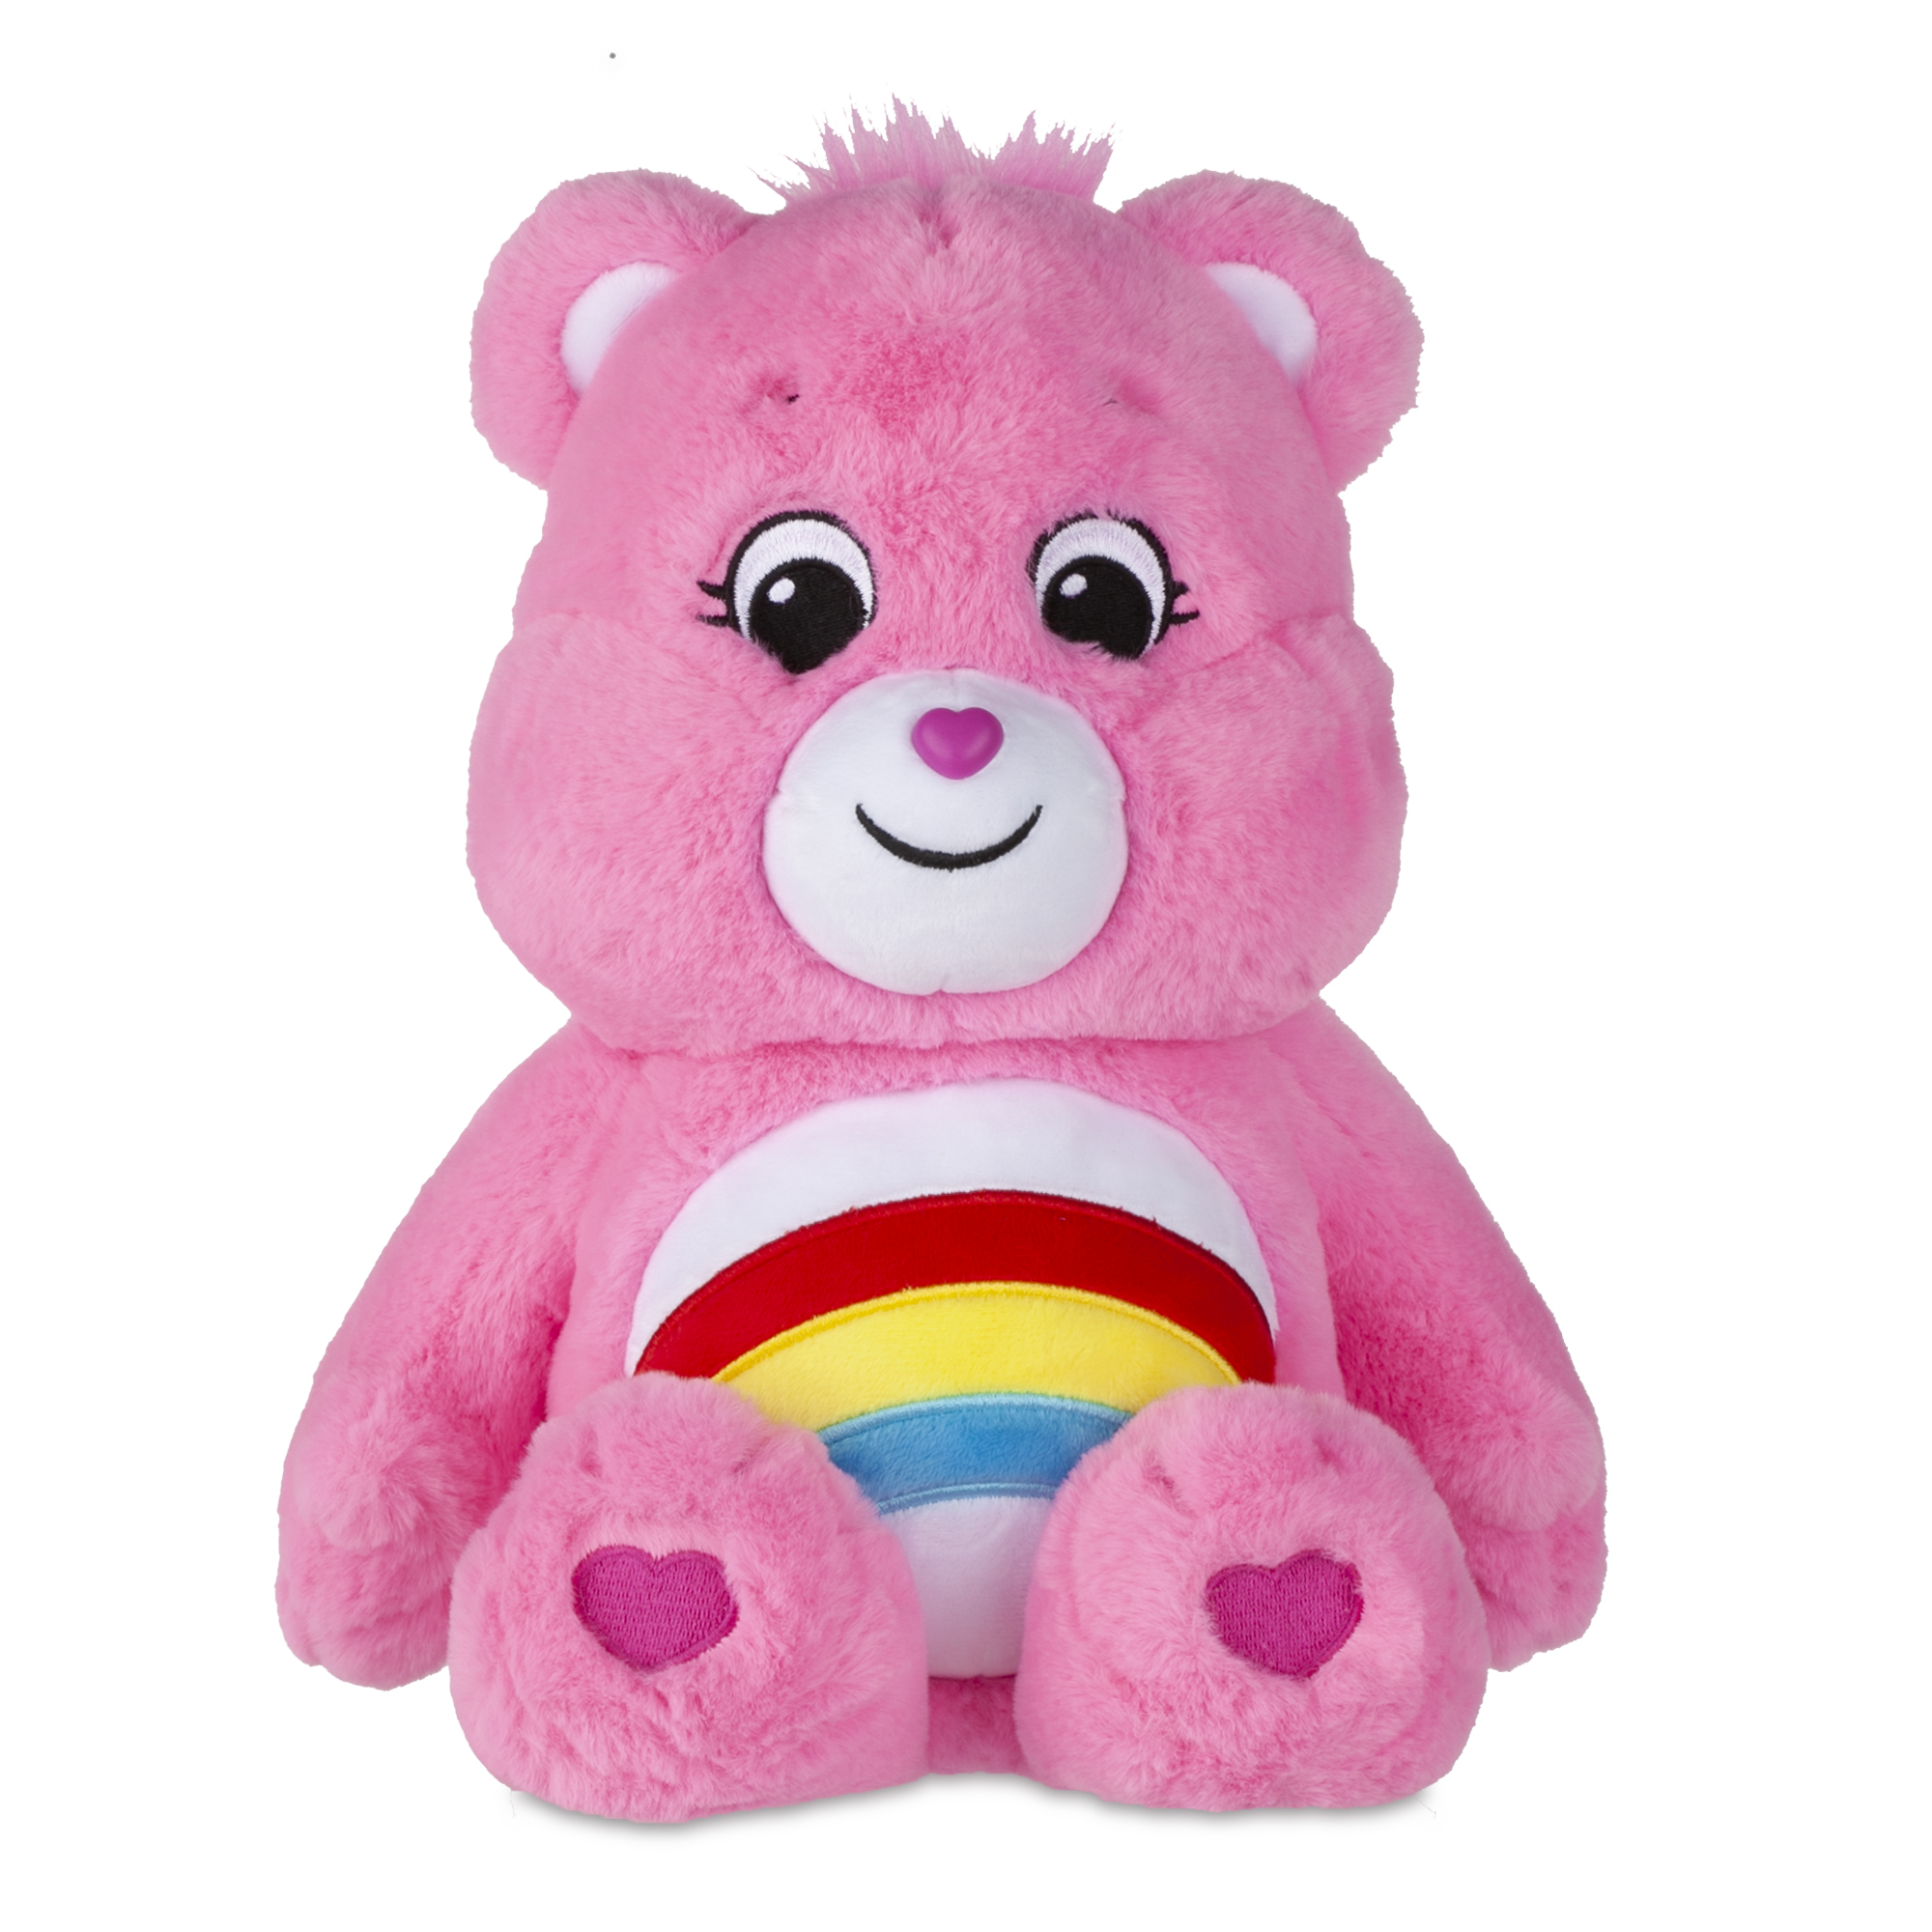 Care Bears 14" Plush - Cheer Bear - Soft Huggable Material! - image 3 of 13